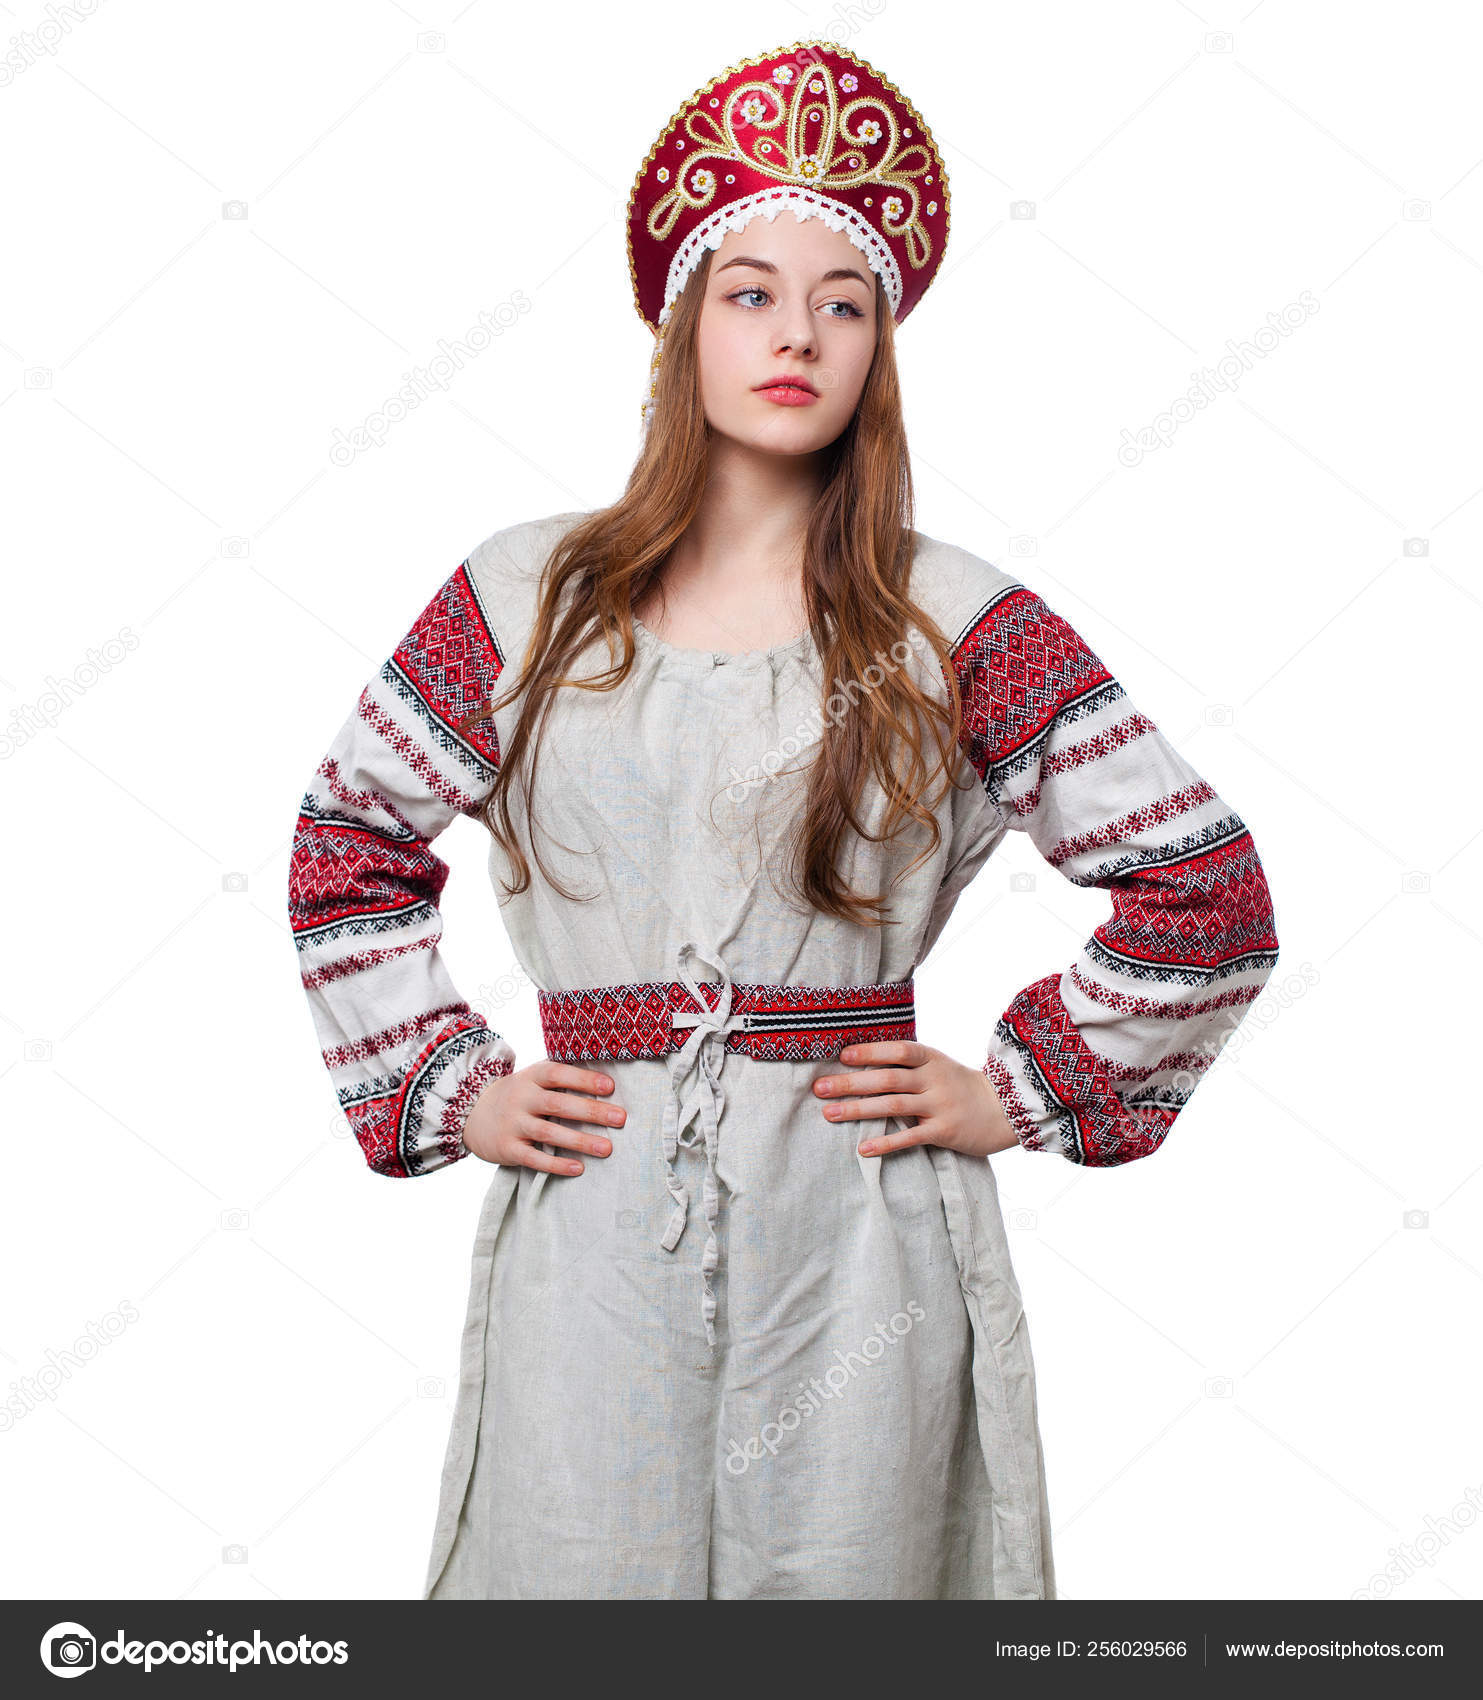 depositphotos_256029566-stock-photo-traditional-russian-folk-costume-portrait.jpg